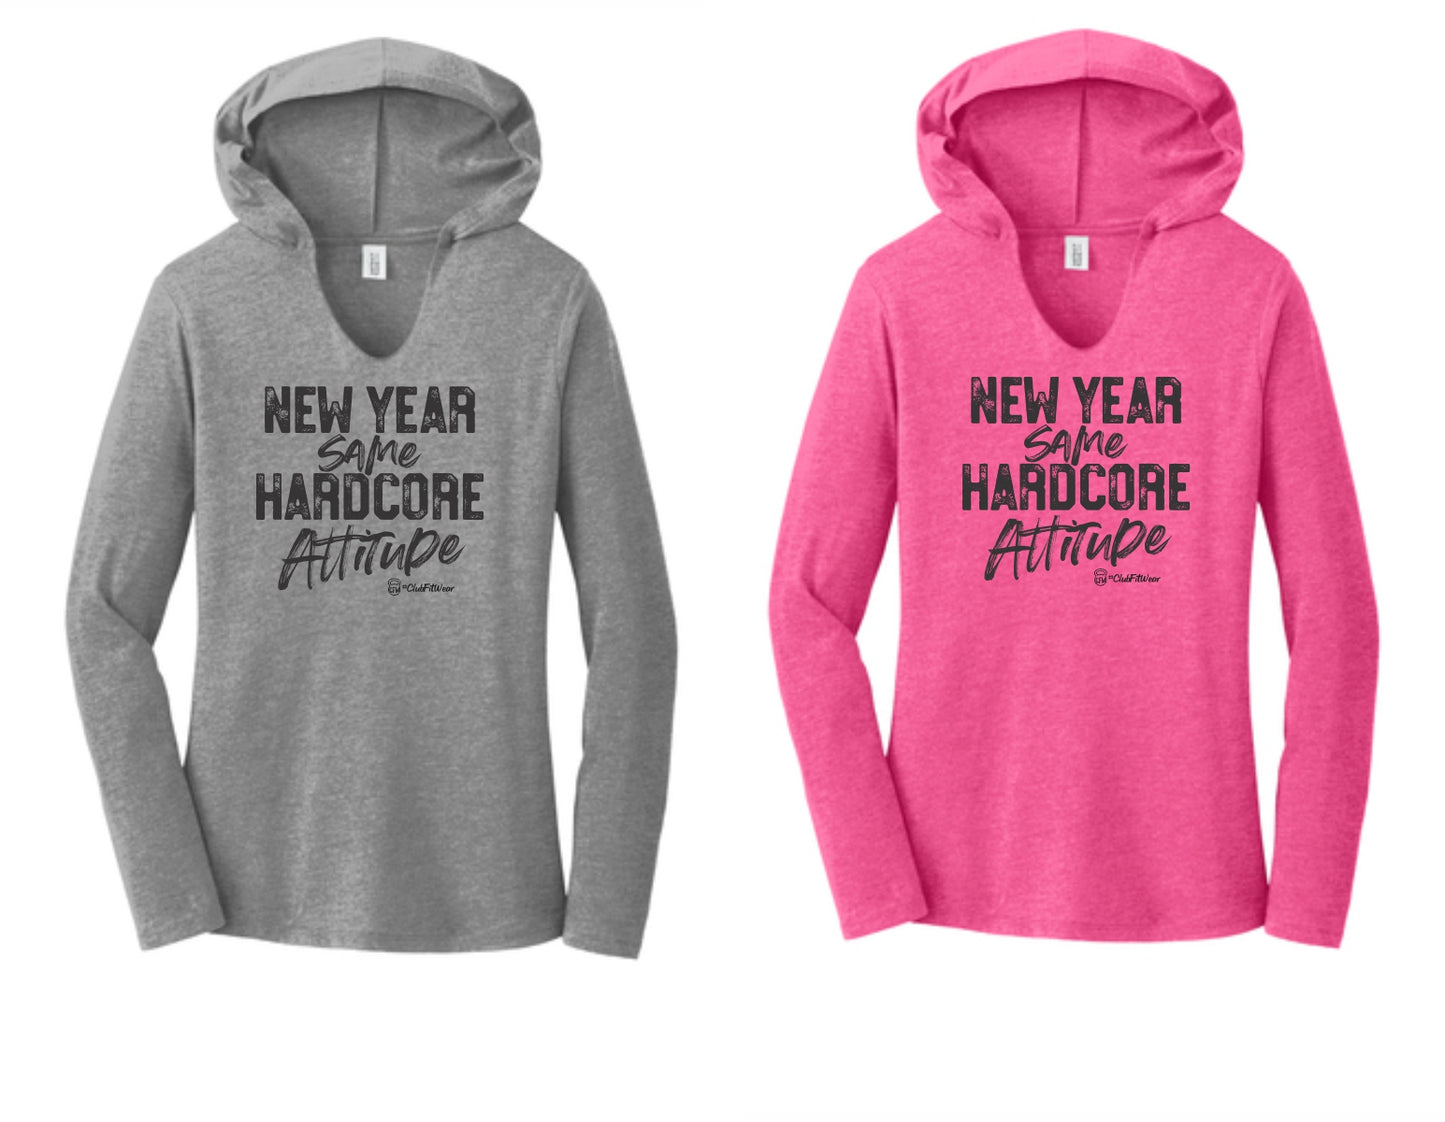 New Year Same Hardcore Attitude - Women's V-Neck Hooded Pullover